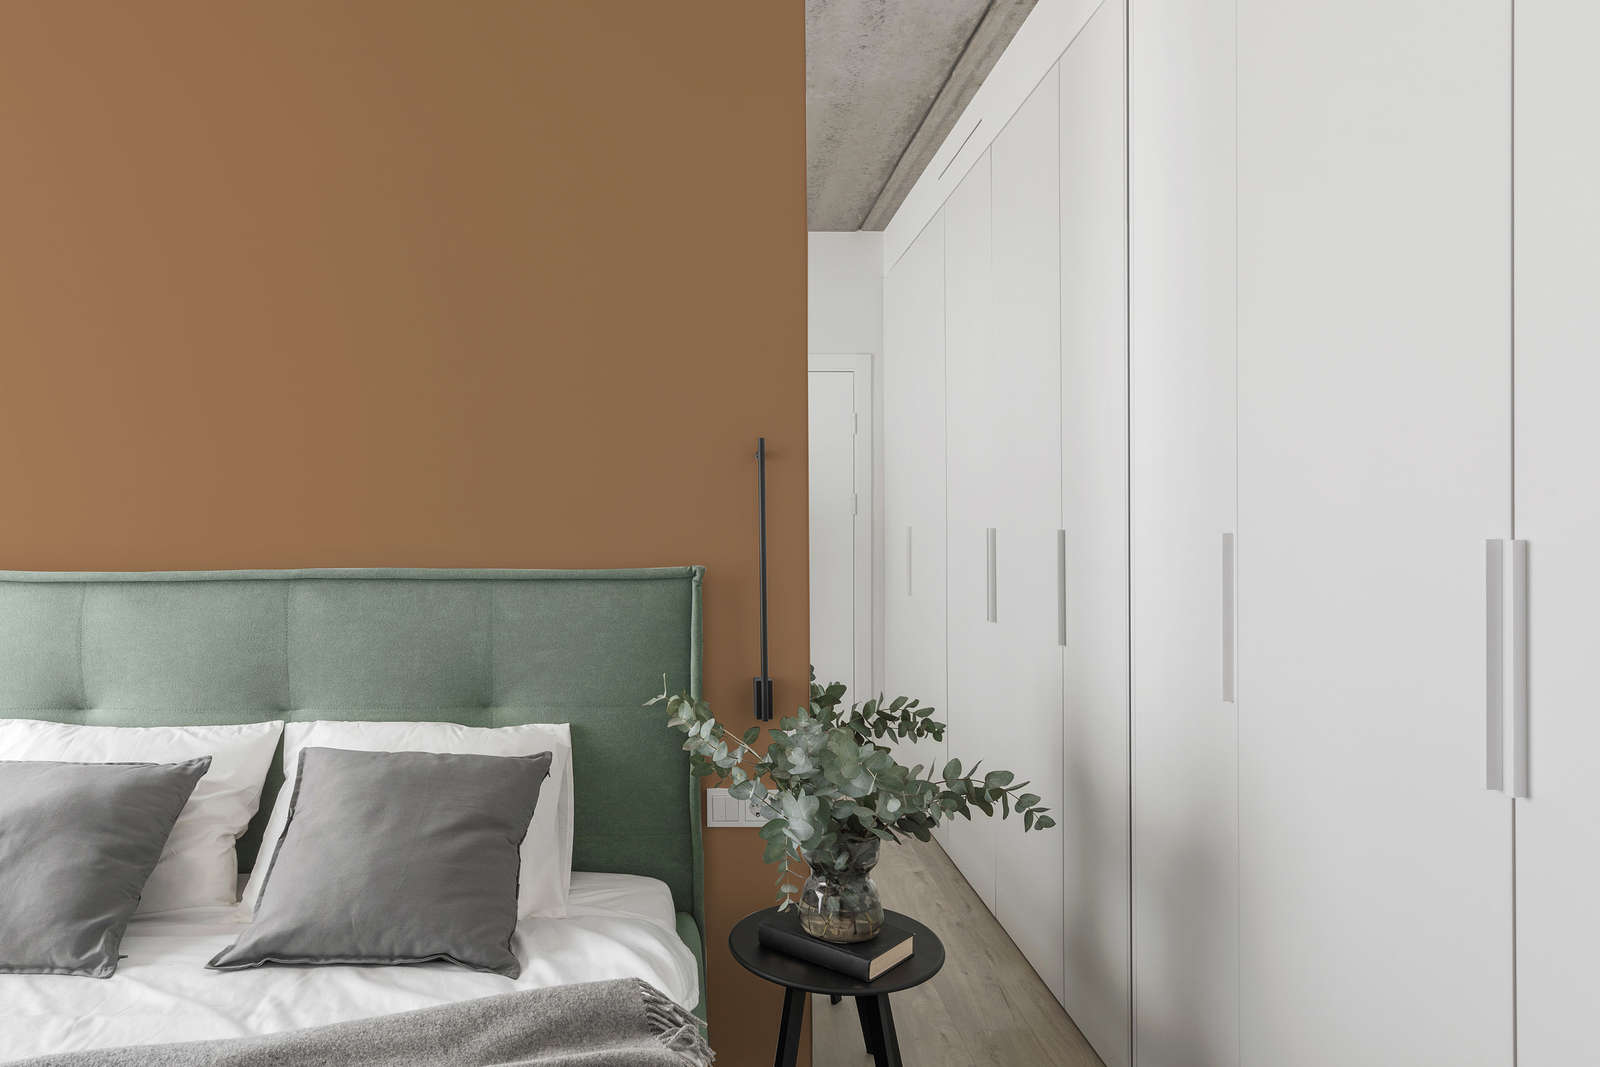             Premium Wall Paint Sensitive Golden Brown »Boho Beige« NW728 – 1 litre
        